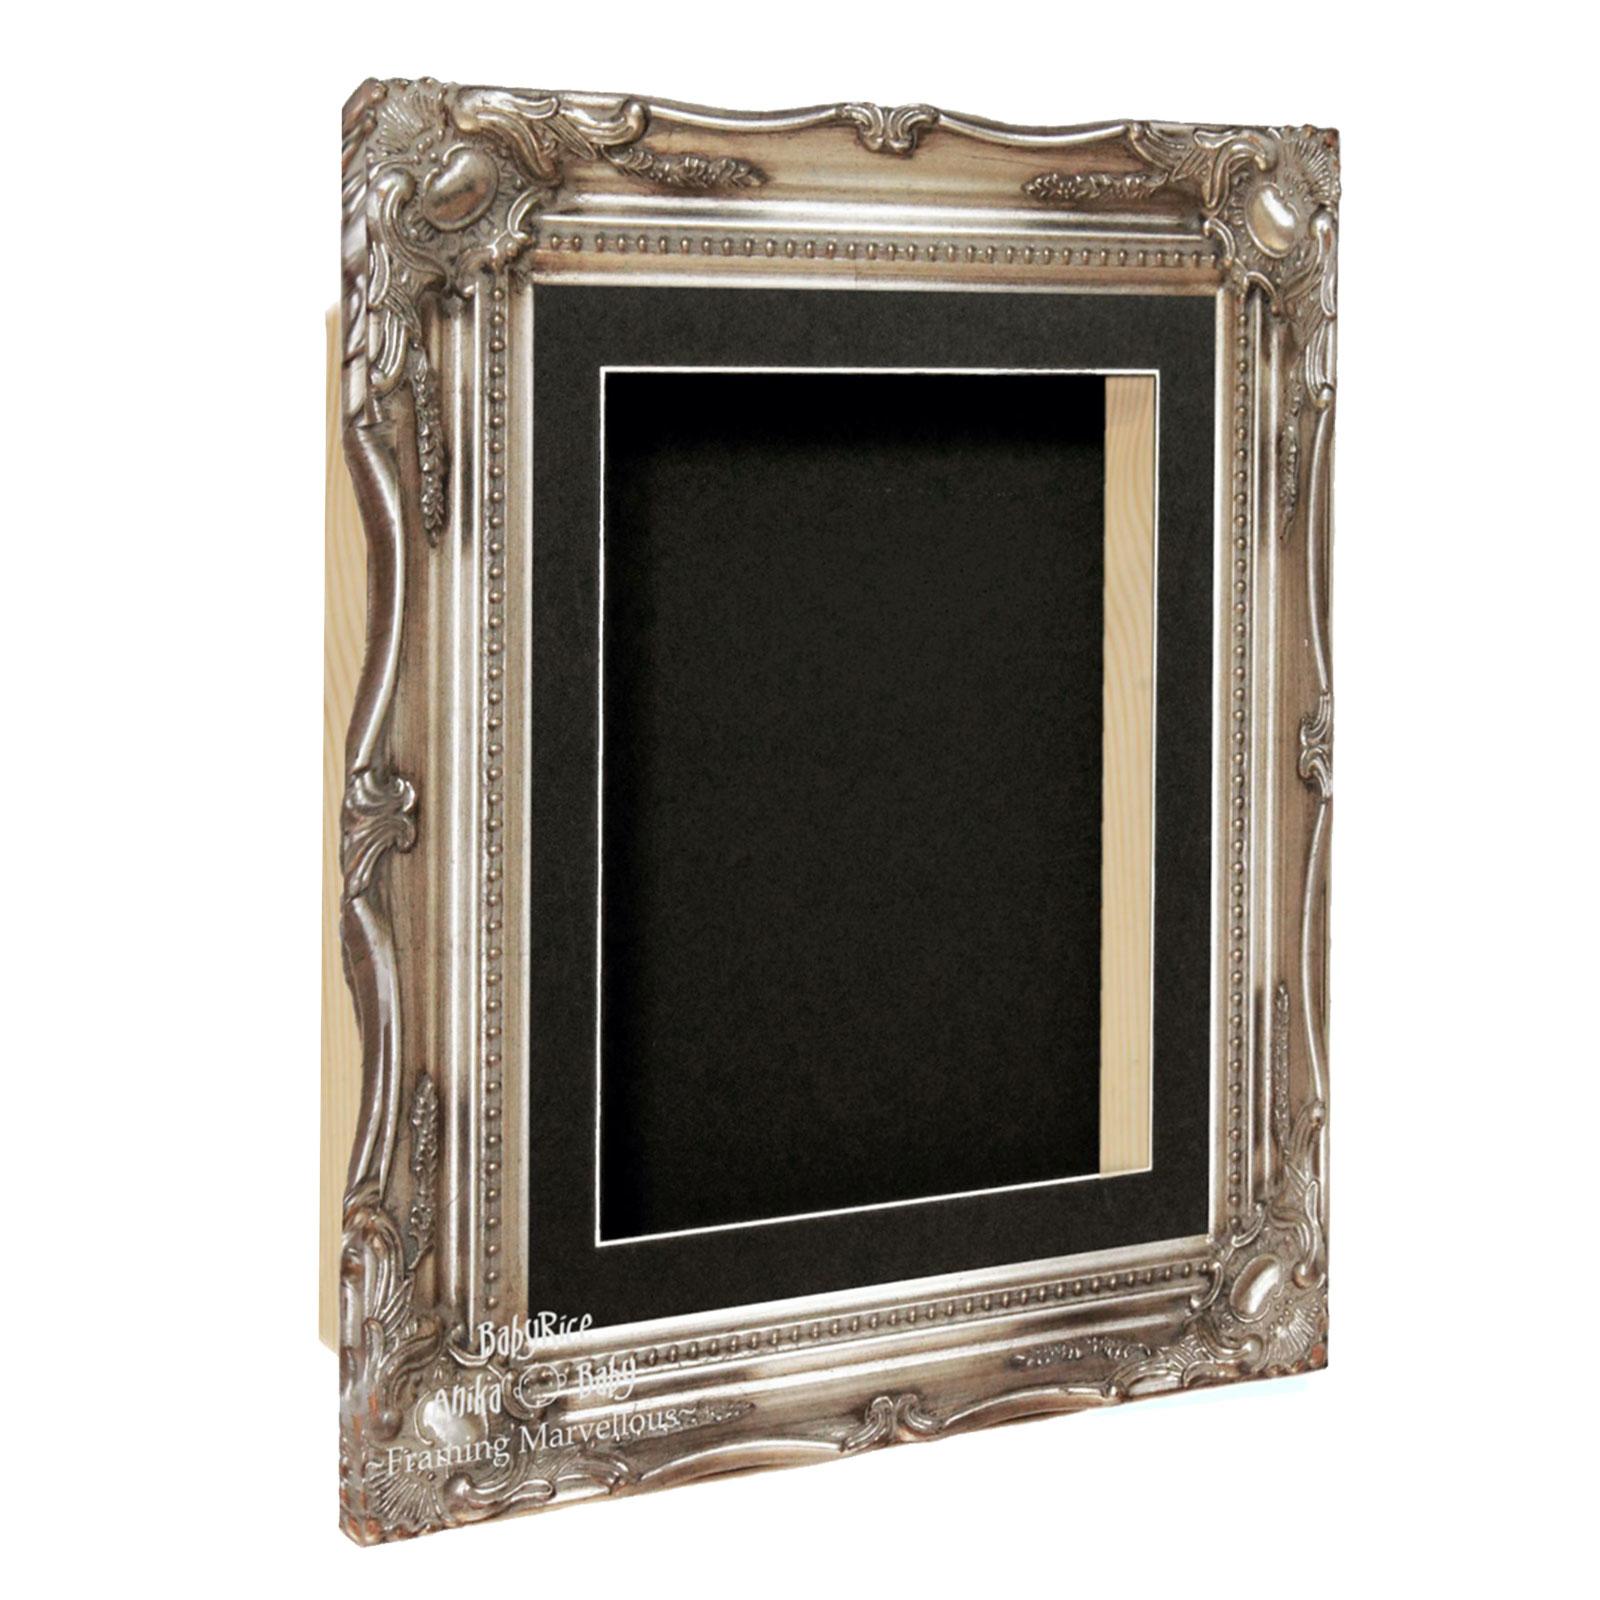 Antique Silver Ornate Rococo Frame, Deep Shadow Box Display